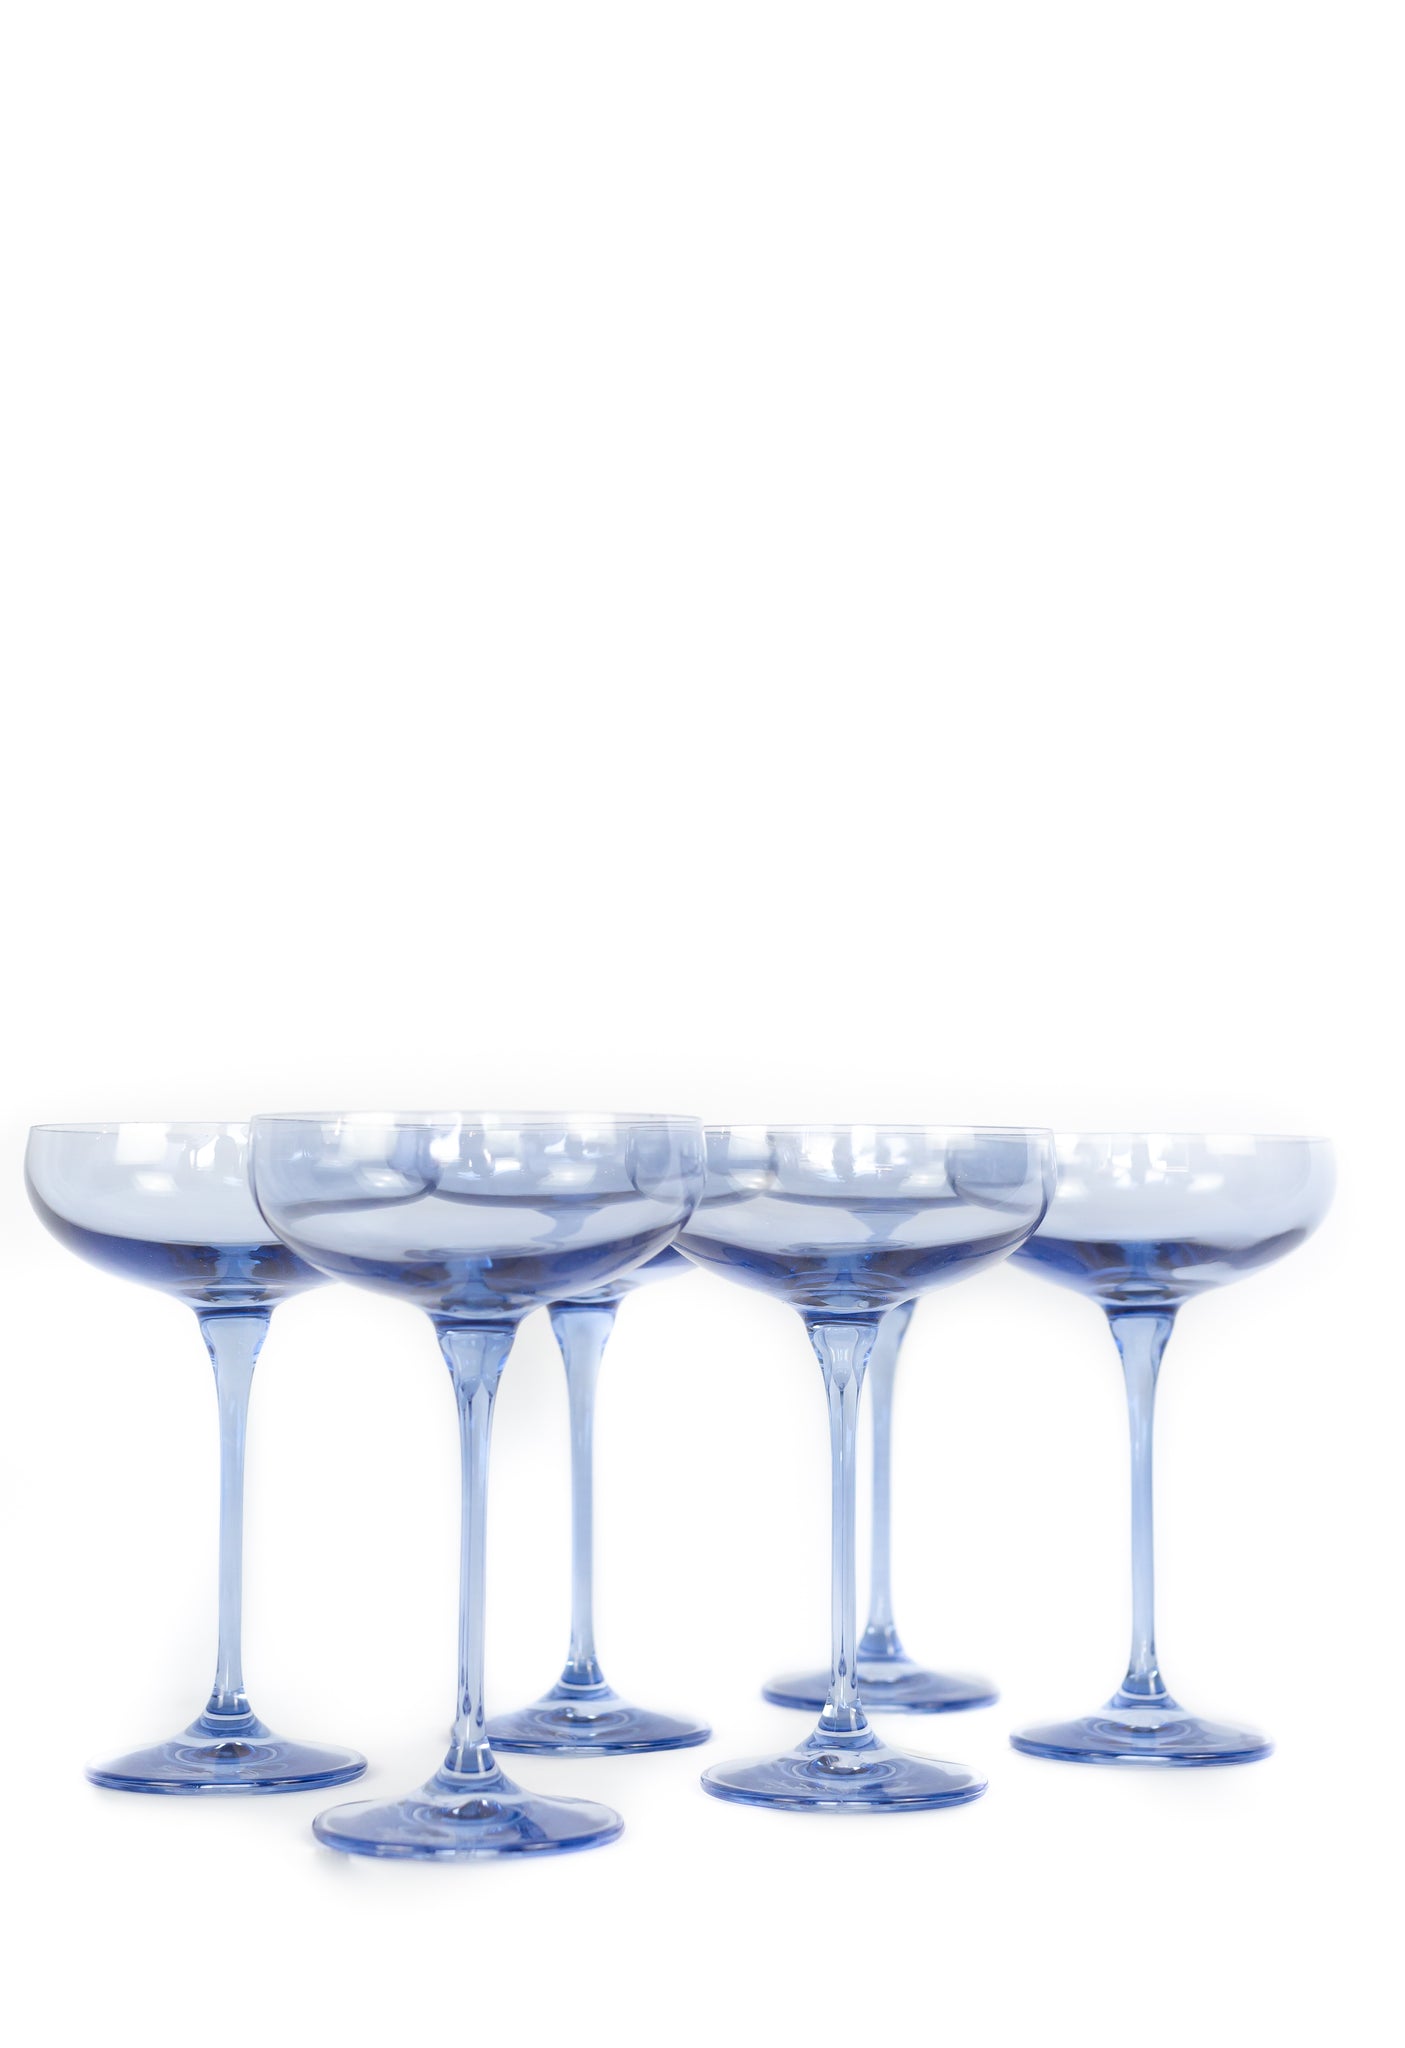 Estelle Champagne Coupe Glasses - Set of 6